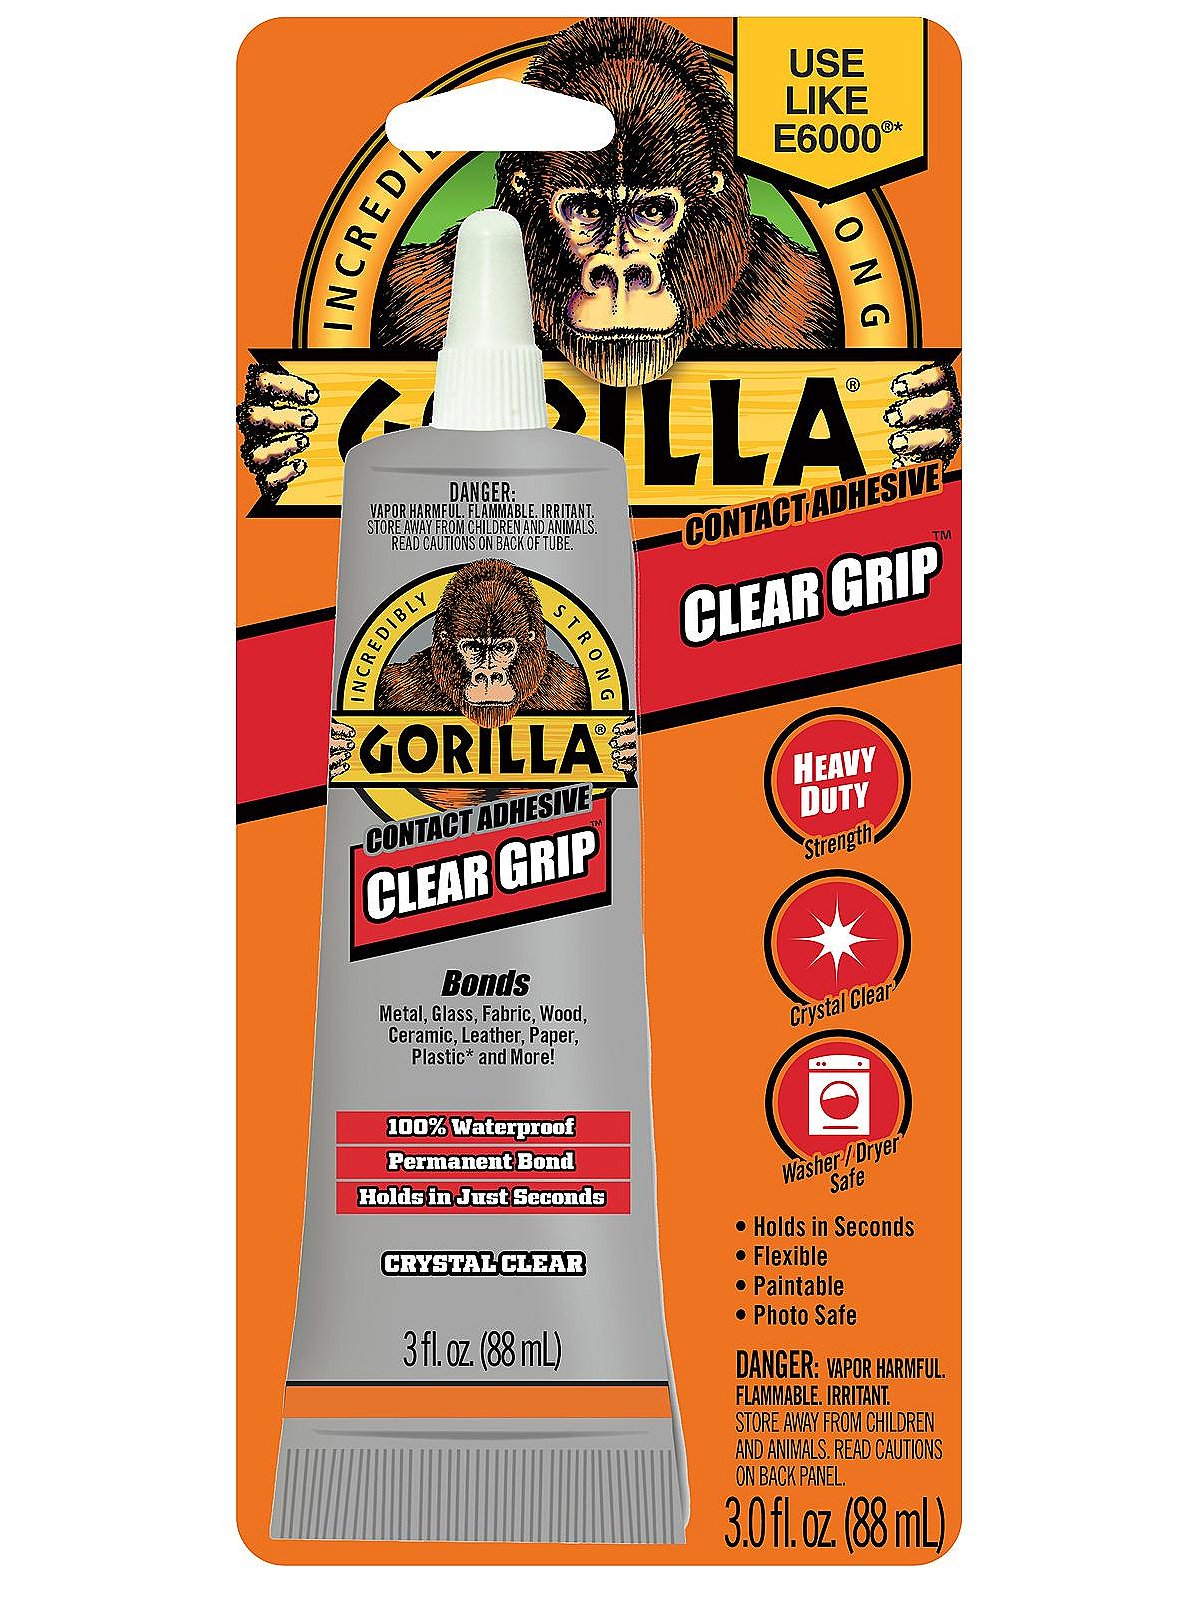 New from Gorilla: Mounting Tape - The Gorilla Glue Company